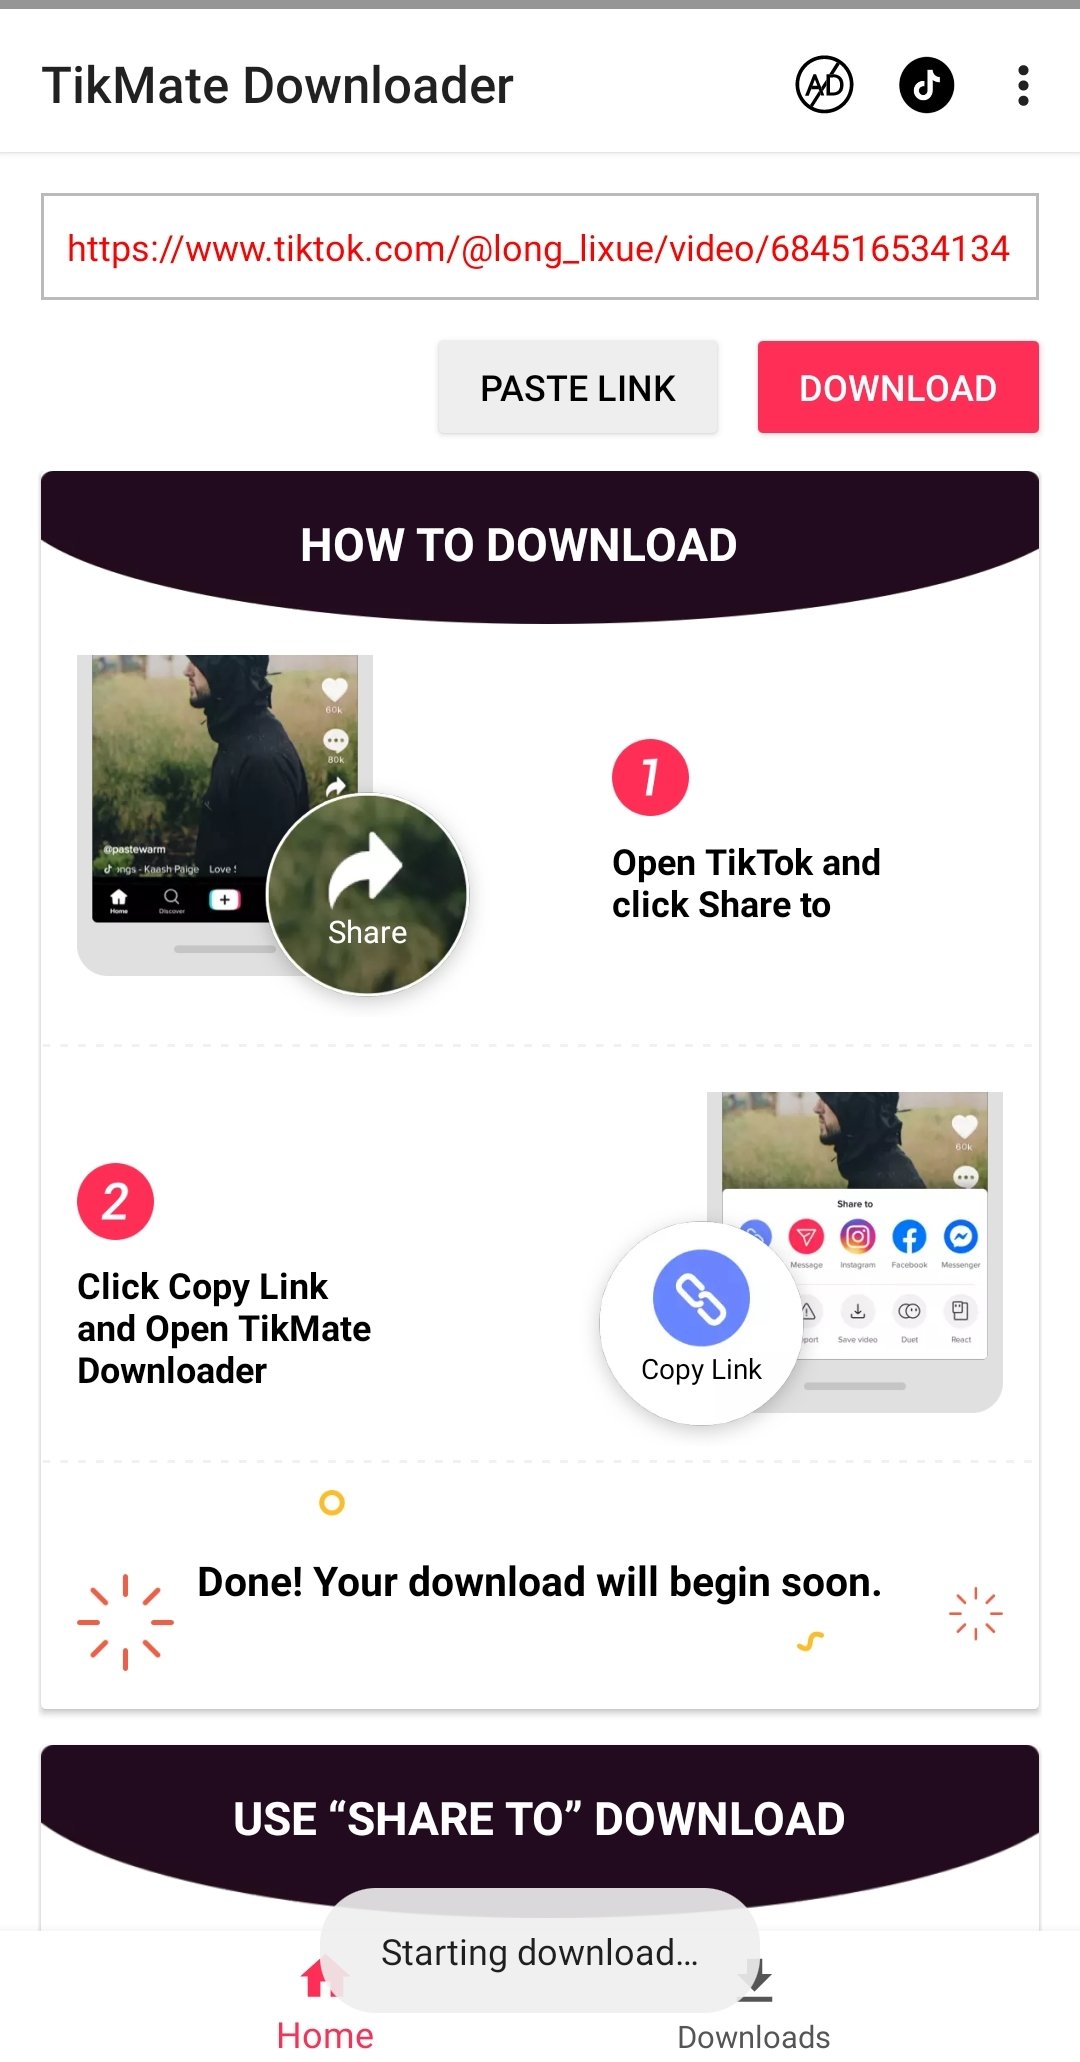 Tikmate - Download video tiktok, Tiktok downloader no Watermark